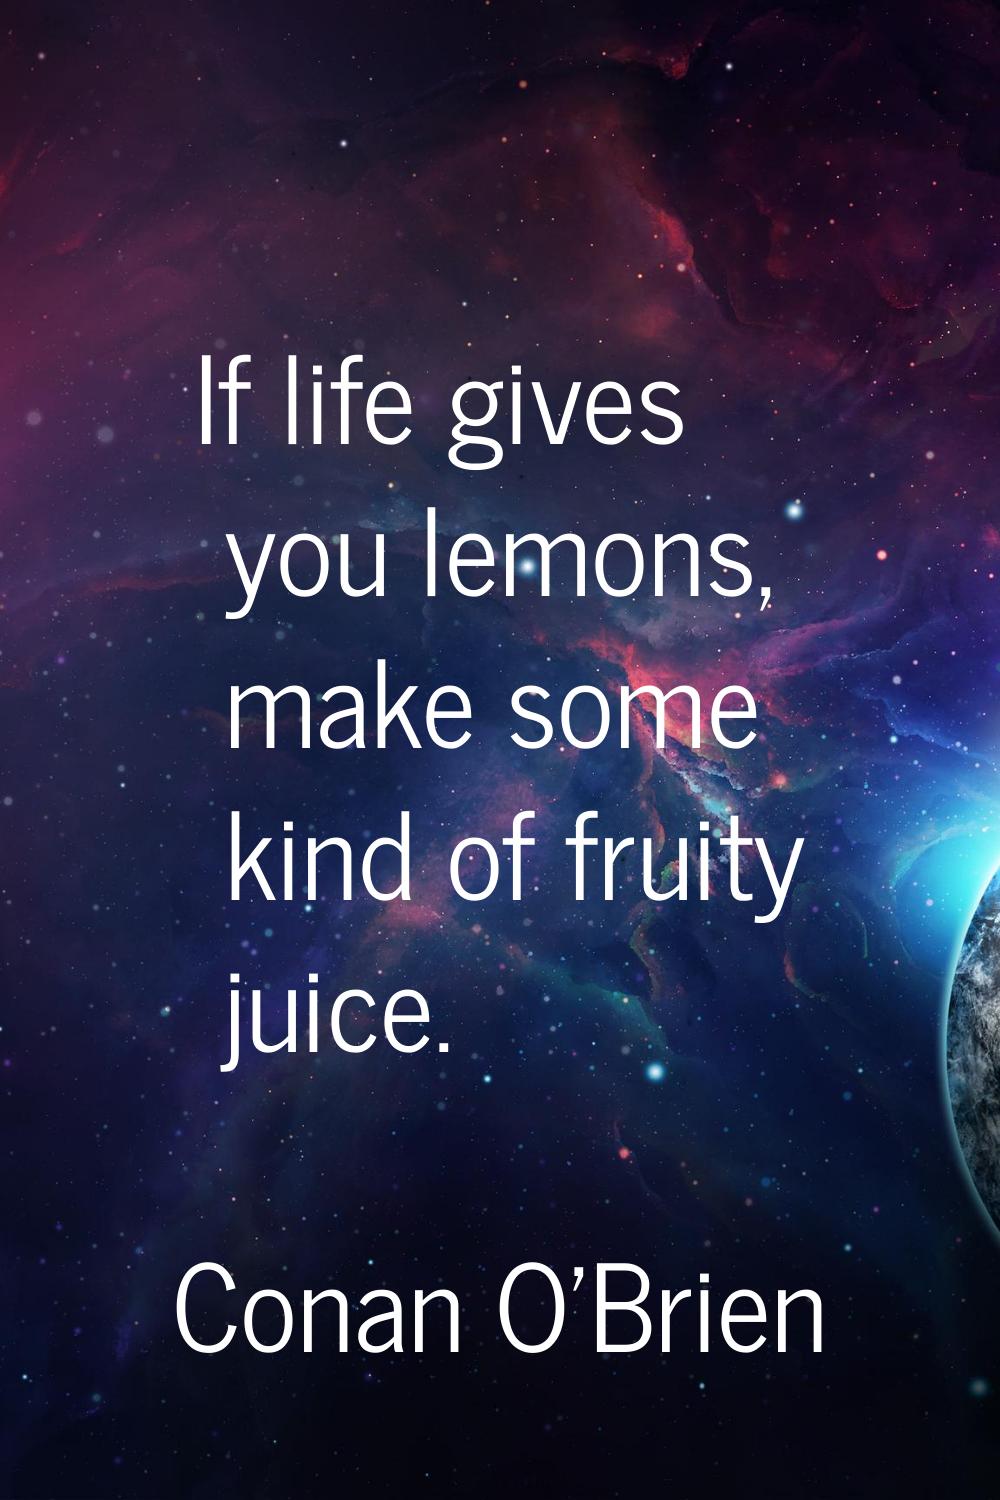 If life gives you lemons, make some kind of fruity juice.